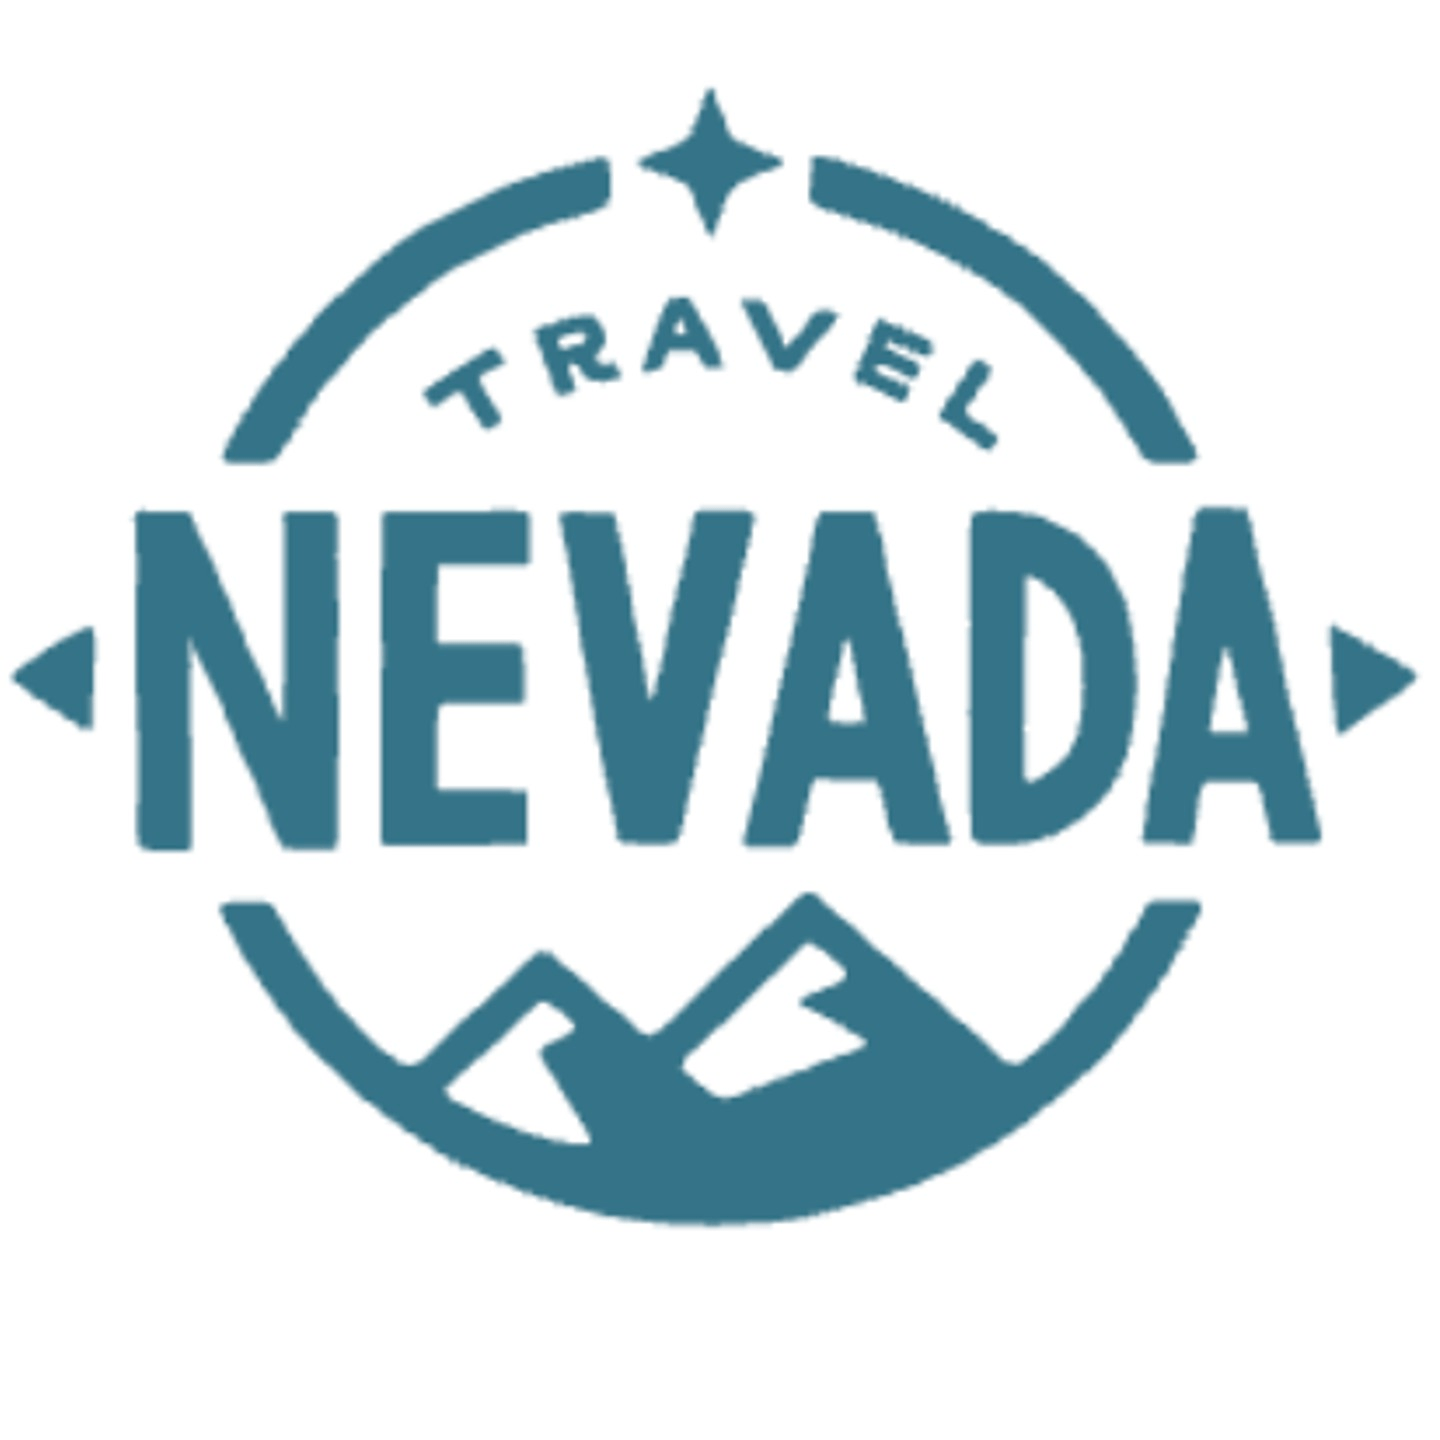 Travel Nevada